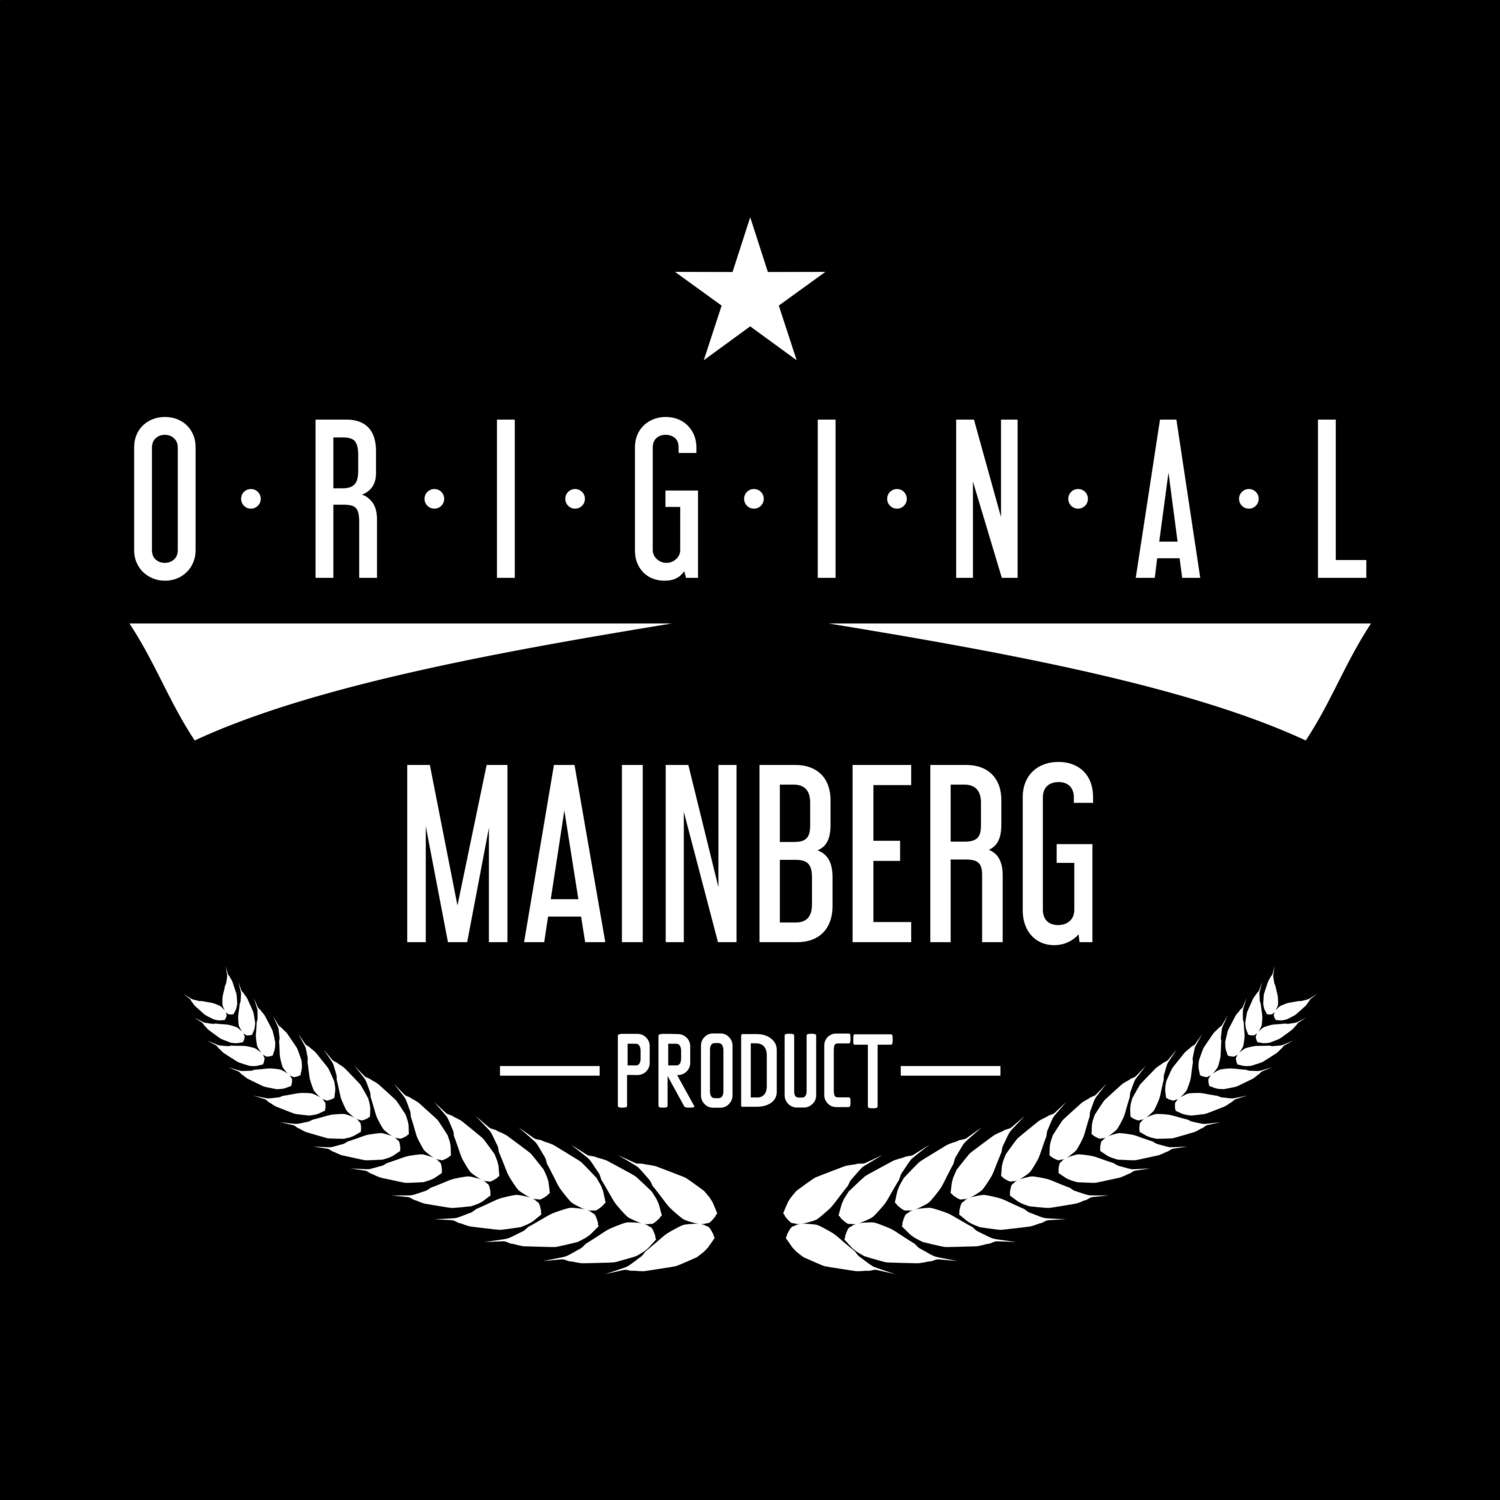 Mainberg T-Shirt »Original Product«